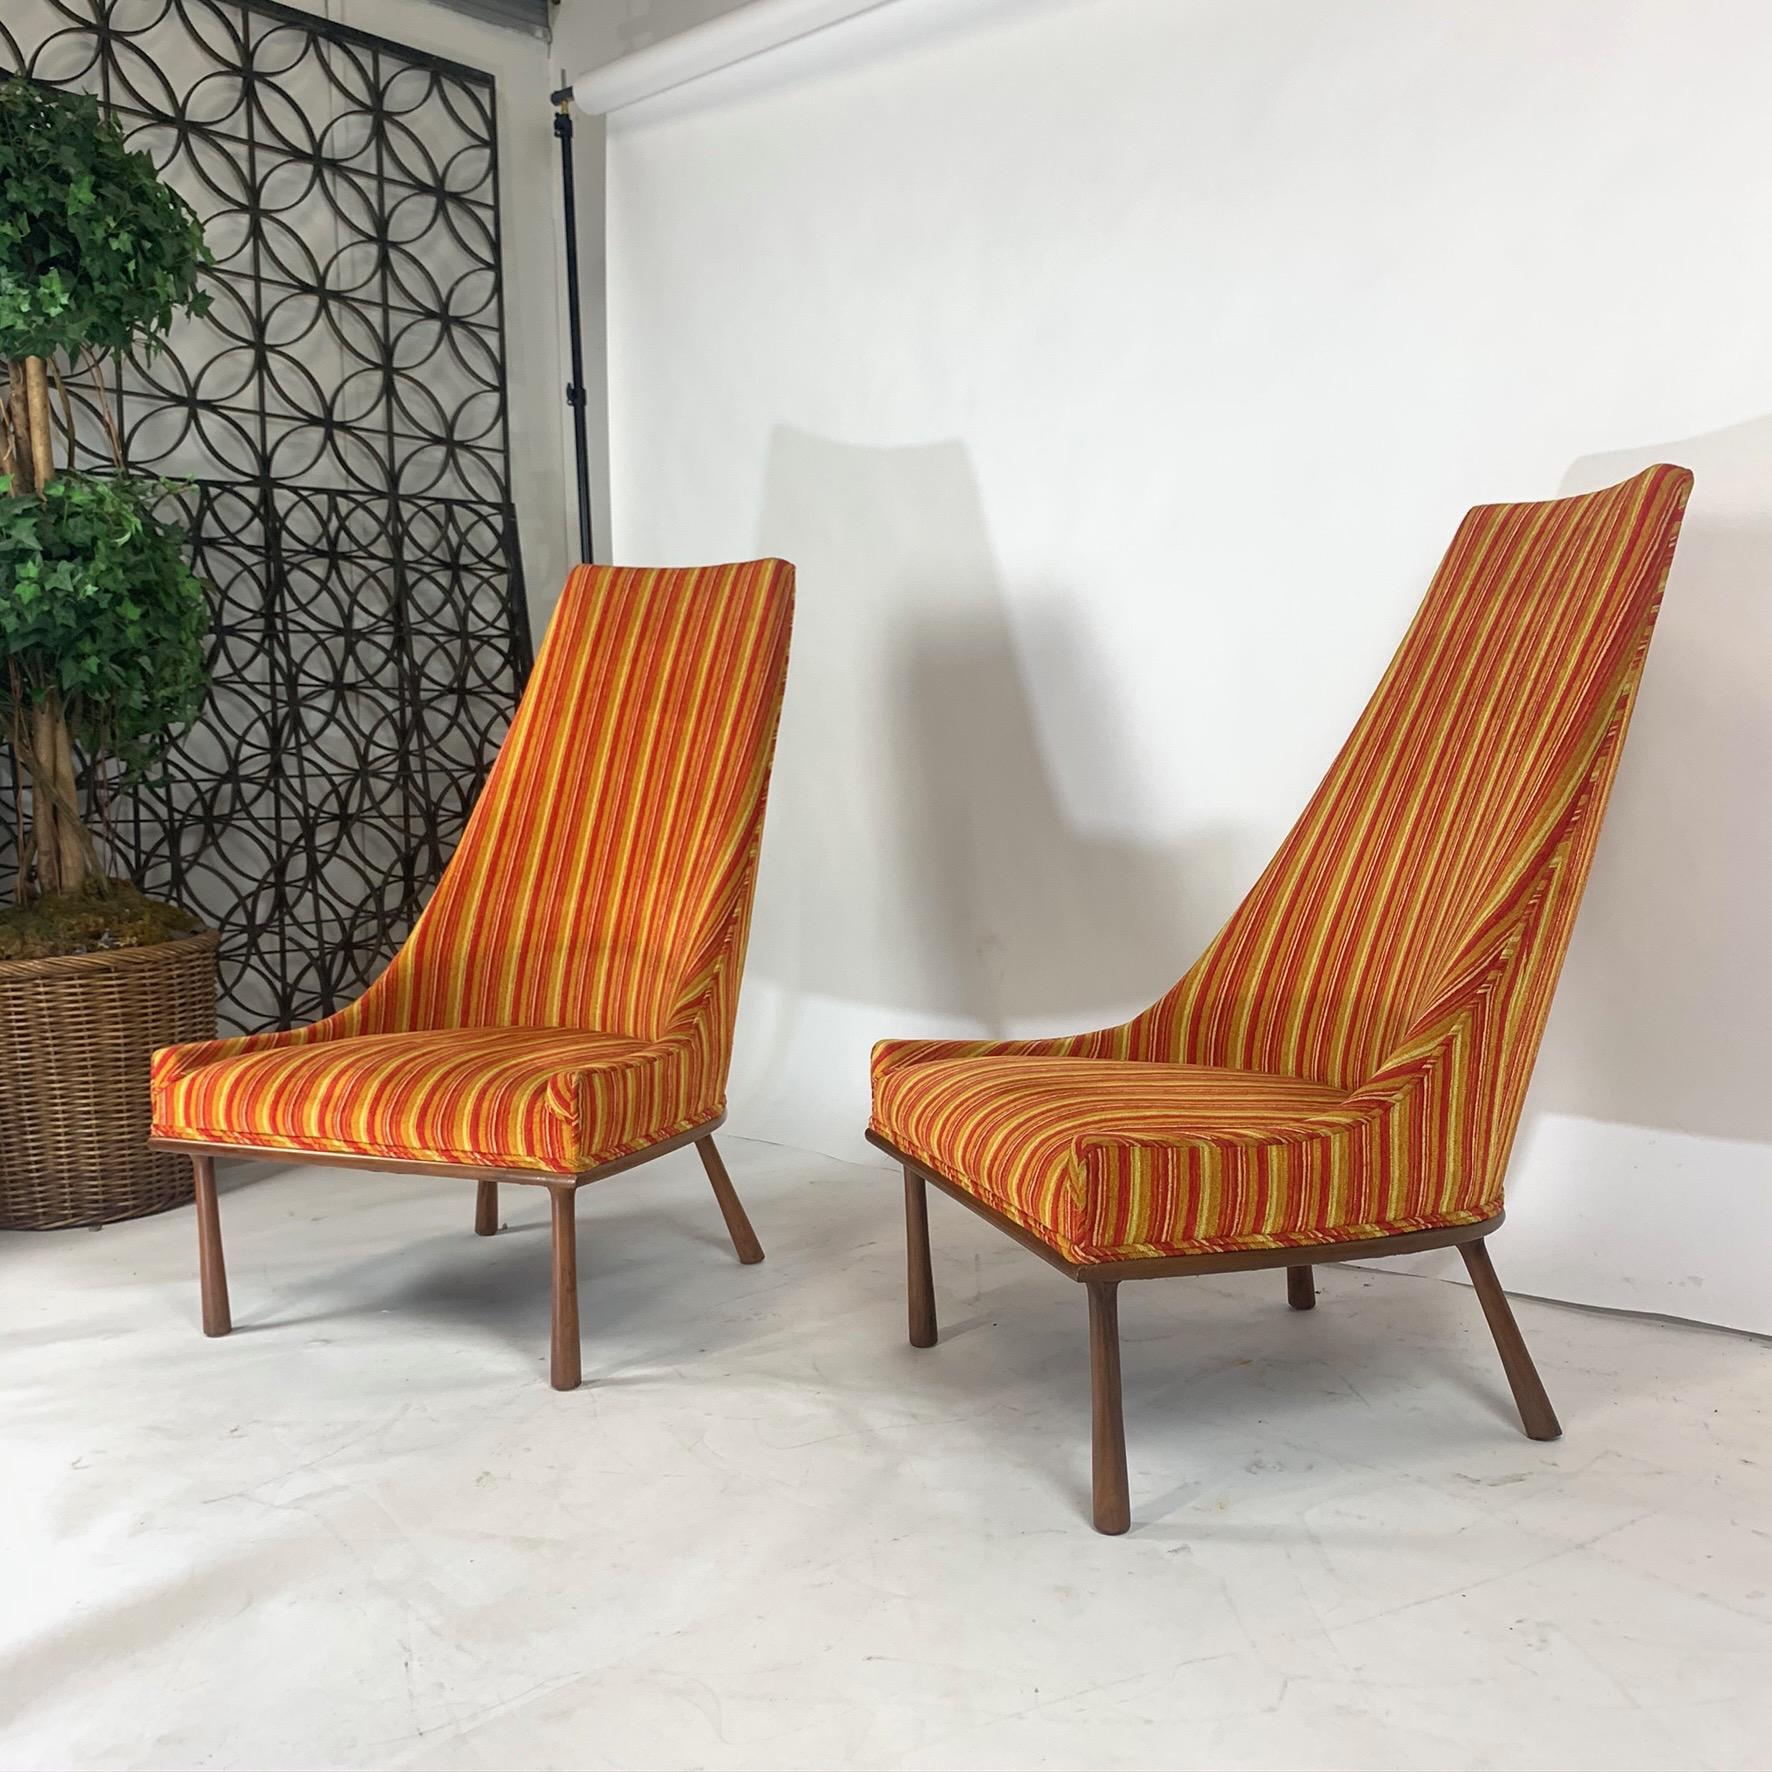 Upholstery Sleek Sculptural High Back Chairs 1960s Mid-Century Modern Velvet and Walnut